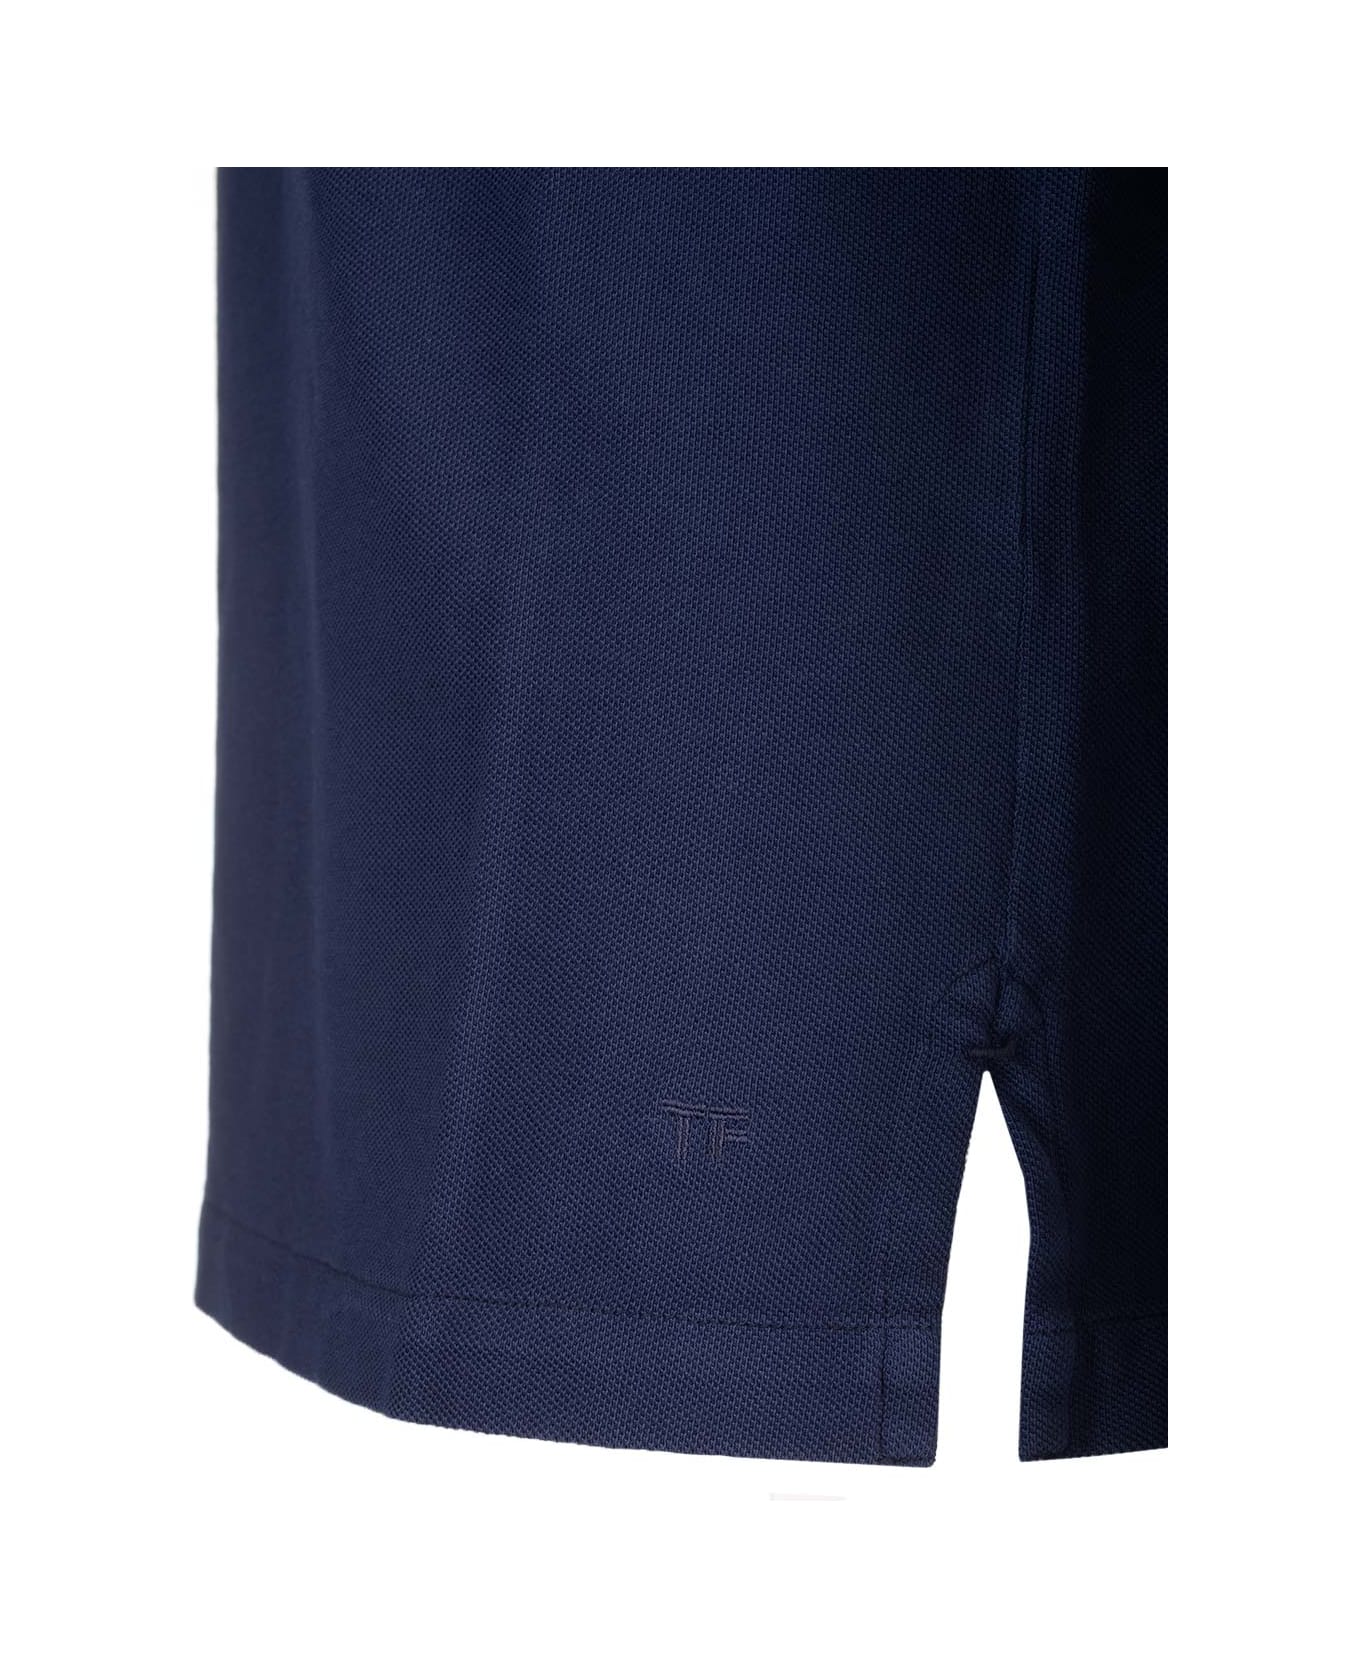 Tom Ford Navy Blue Cotton Polo Shirt - BLUE